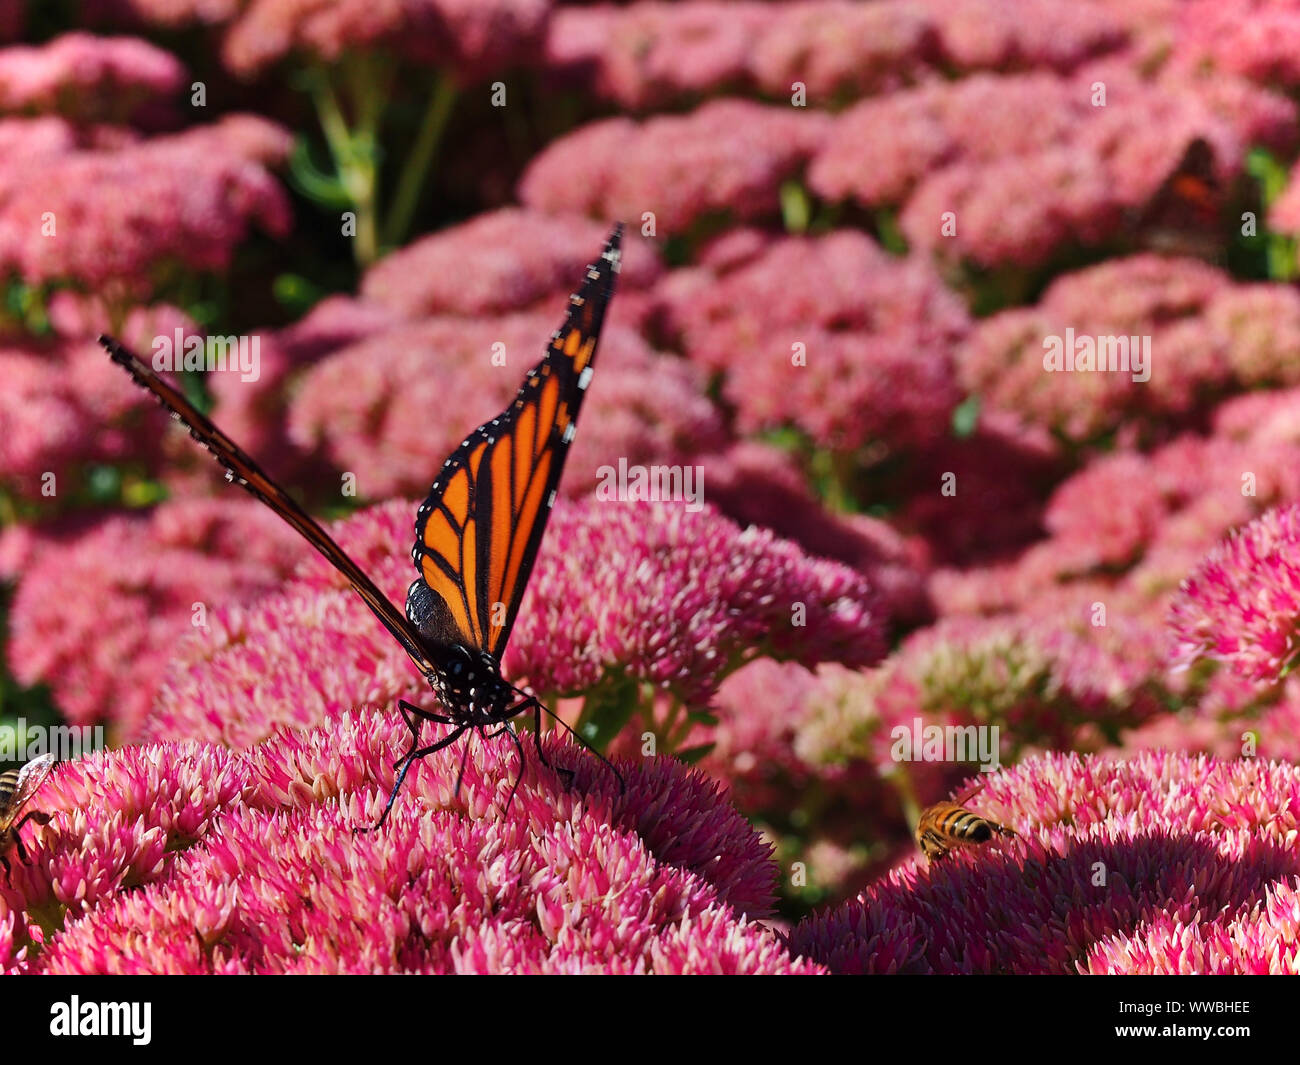 Monarch butterfly (Danaus plexippus) on the brilliant pink, nectar rich flower head of an Autumn Joy (Hylotelephium herbstsfreude). Stock Photo